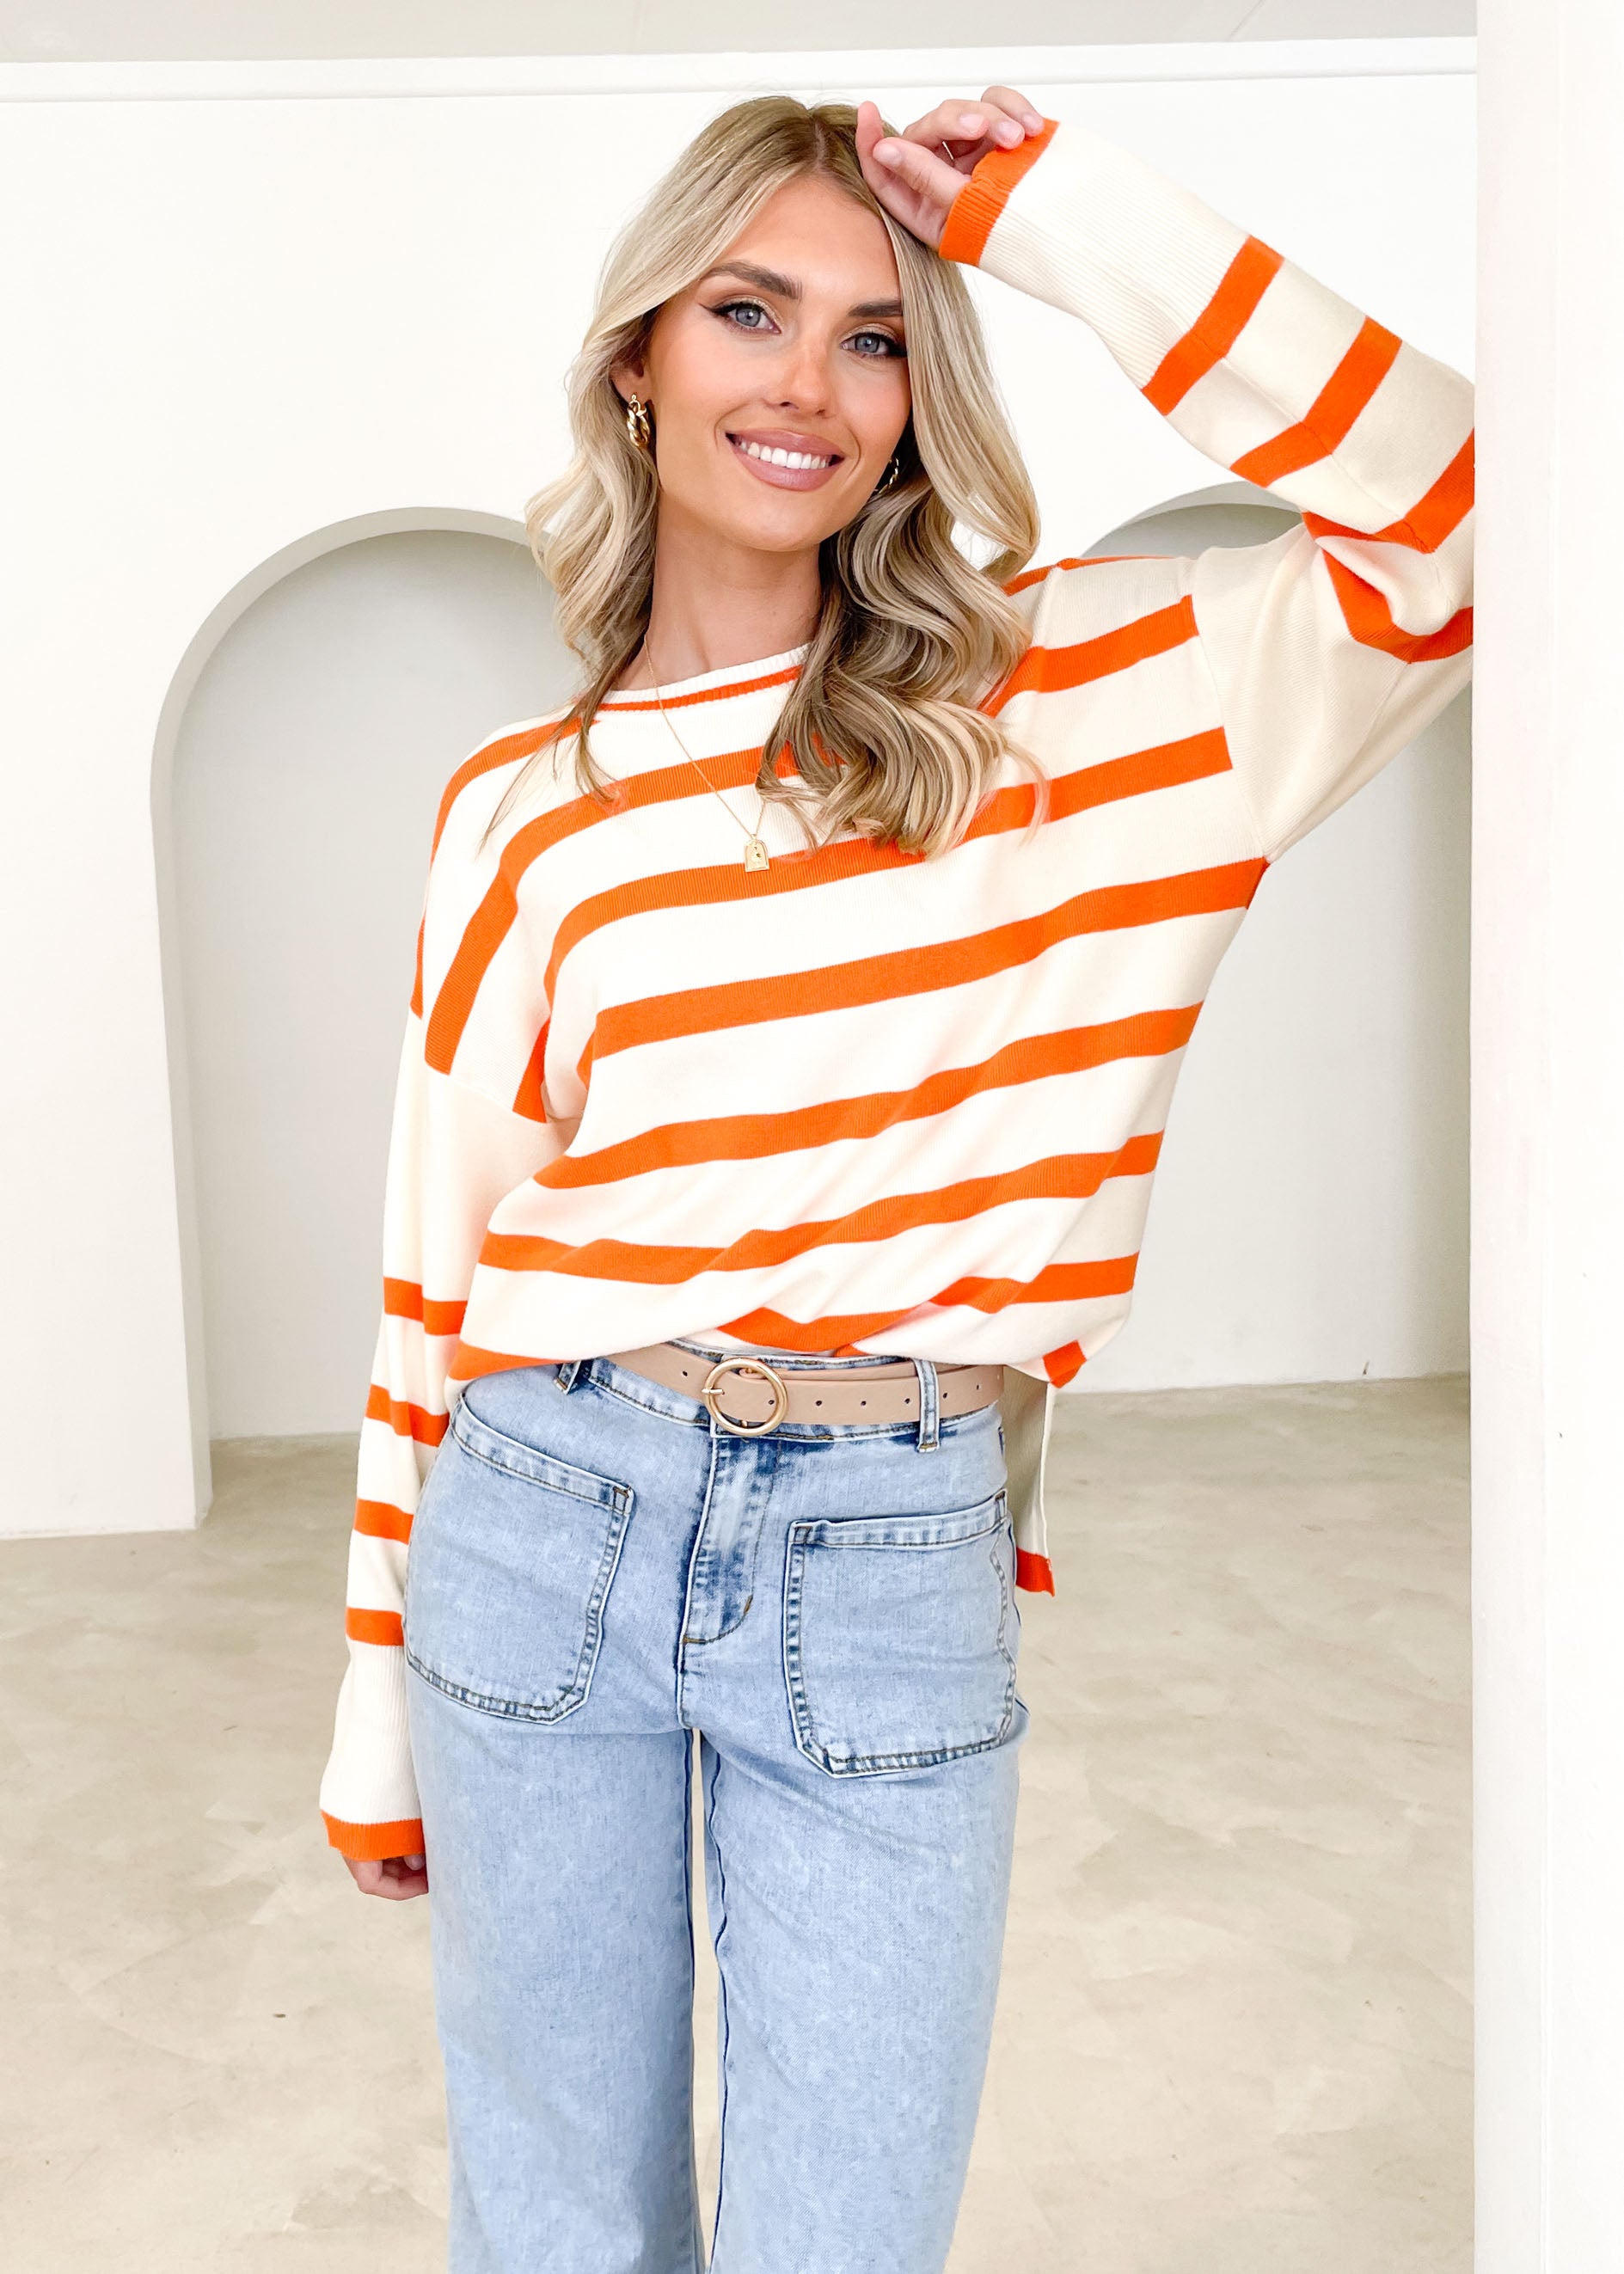 Mauriel Sweater - Orange Stripe